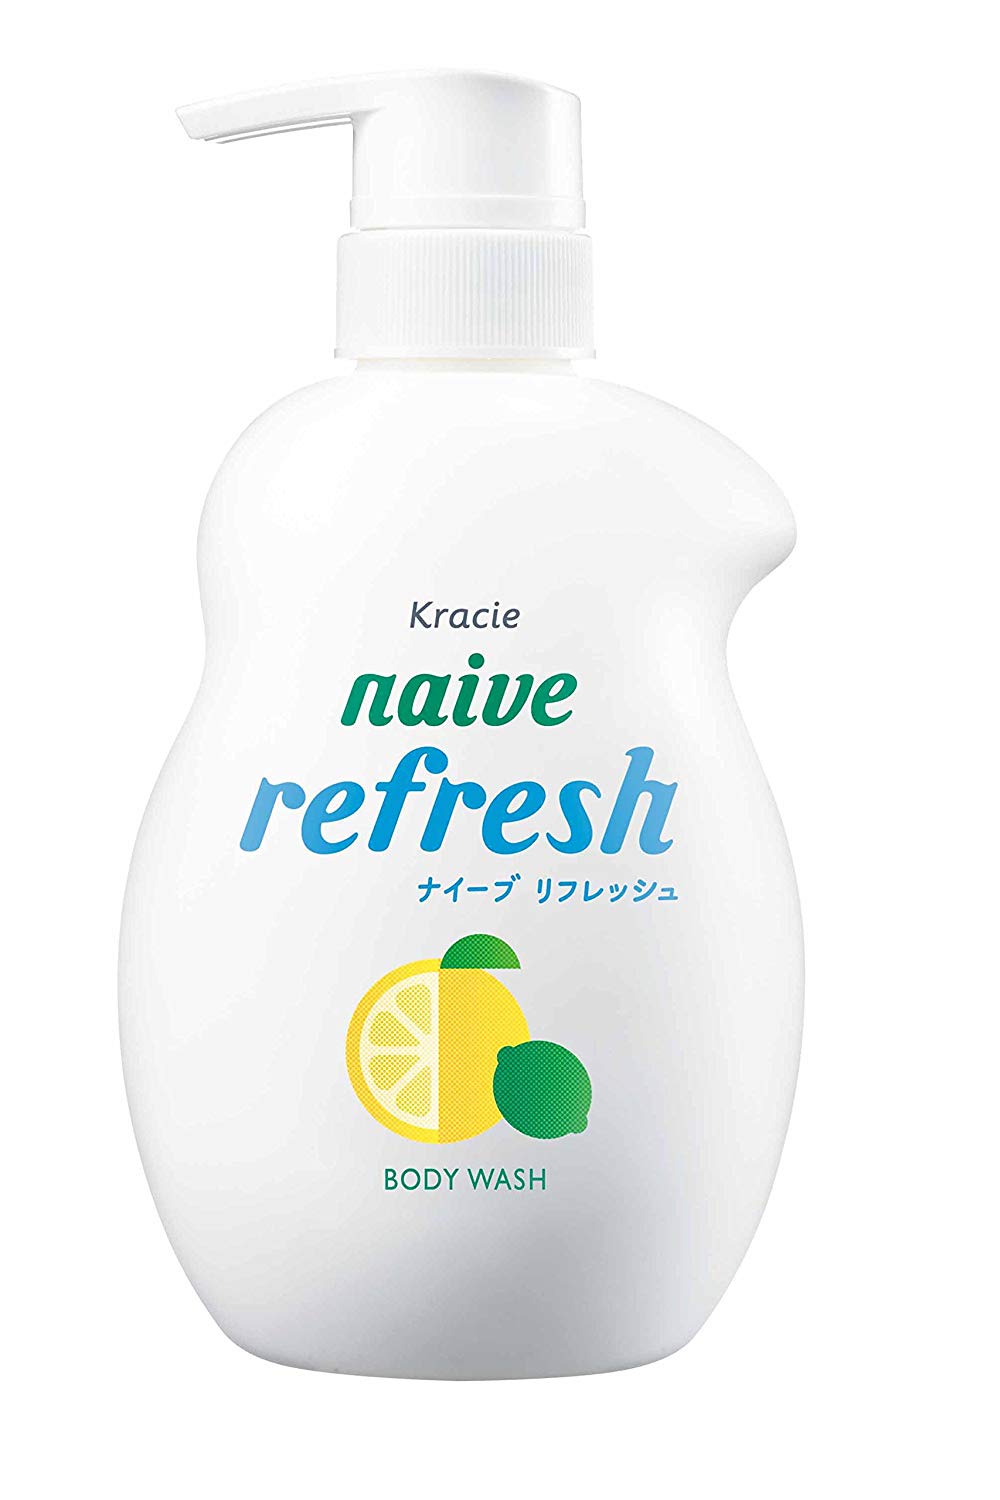 KRACIE Naive Body Pump Soap (Refresh) 530ml